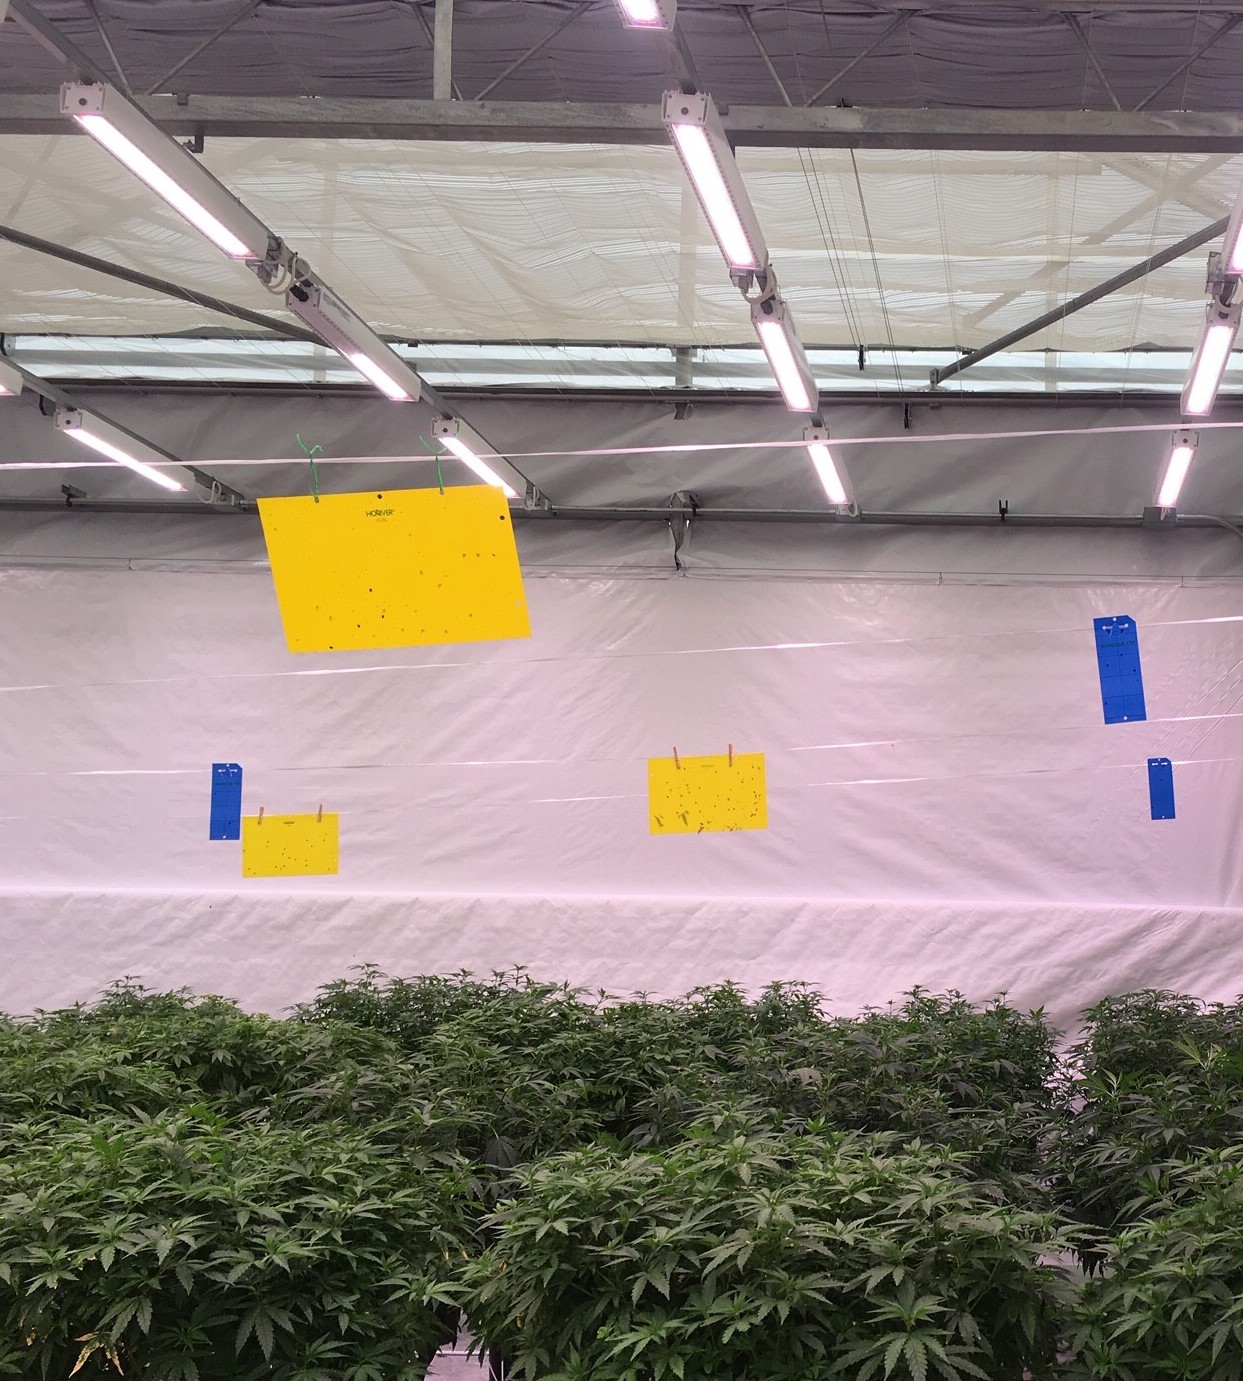 LED trial area with hemp crop underneath